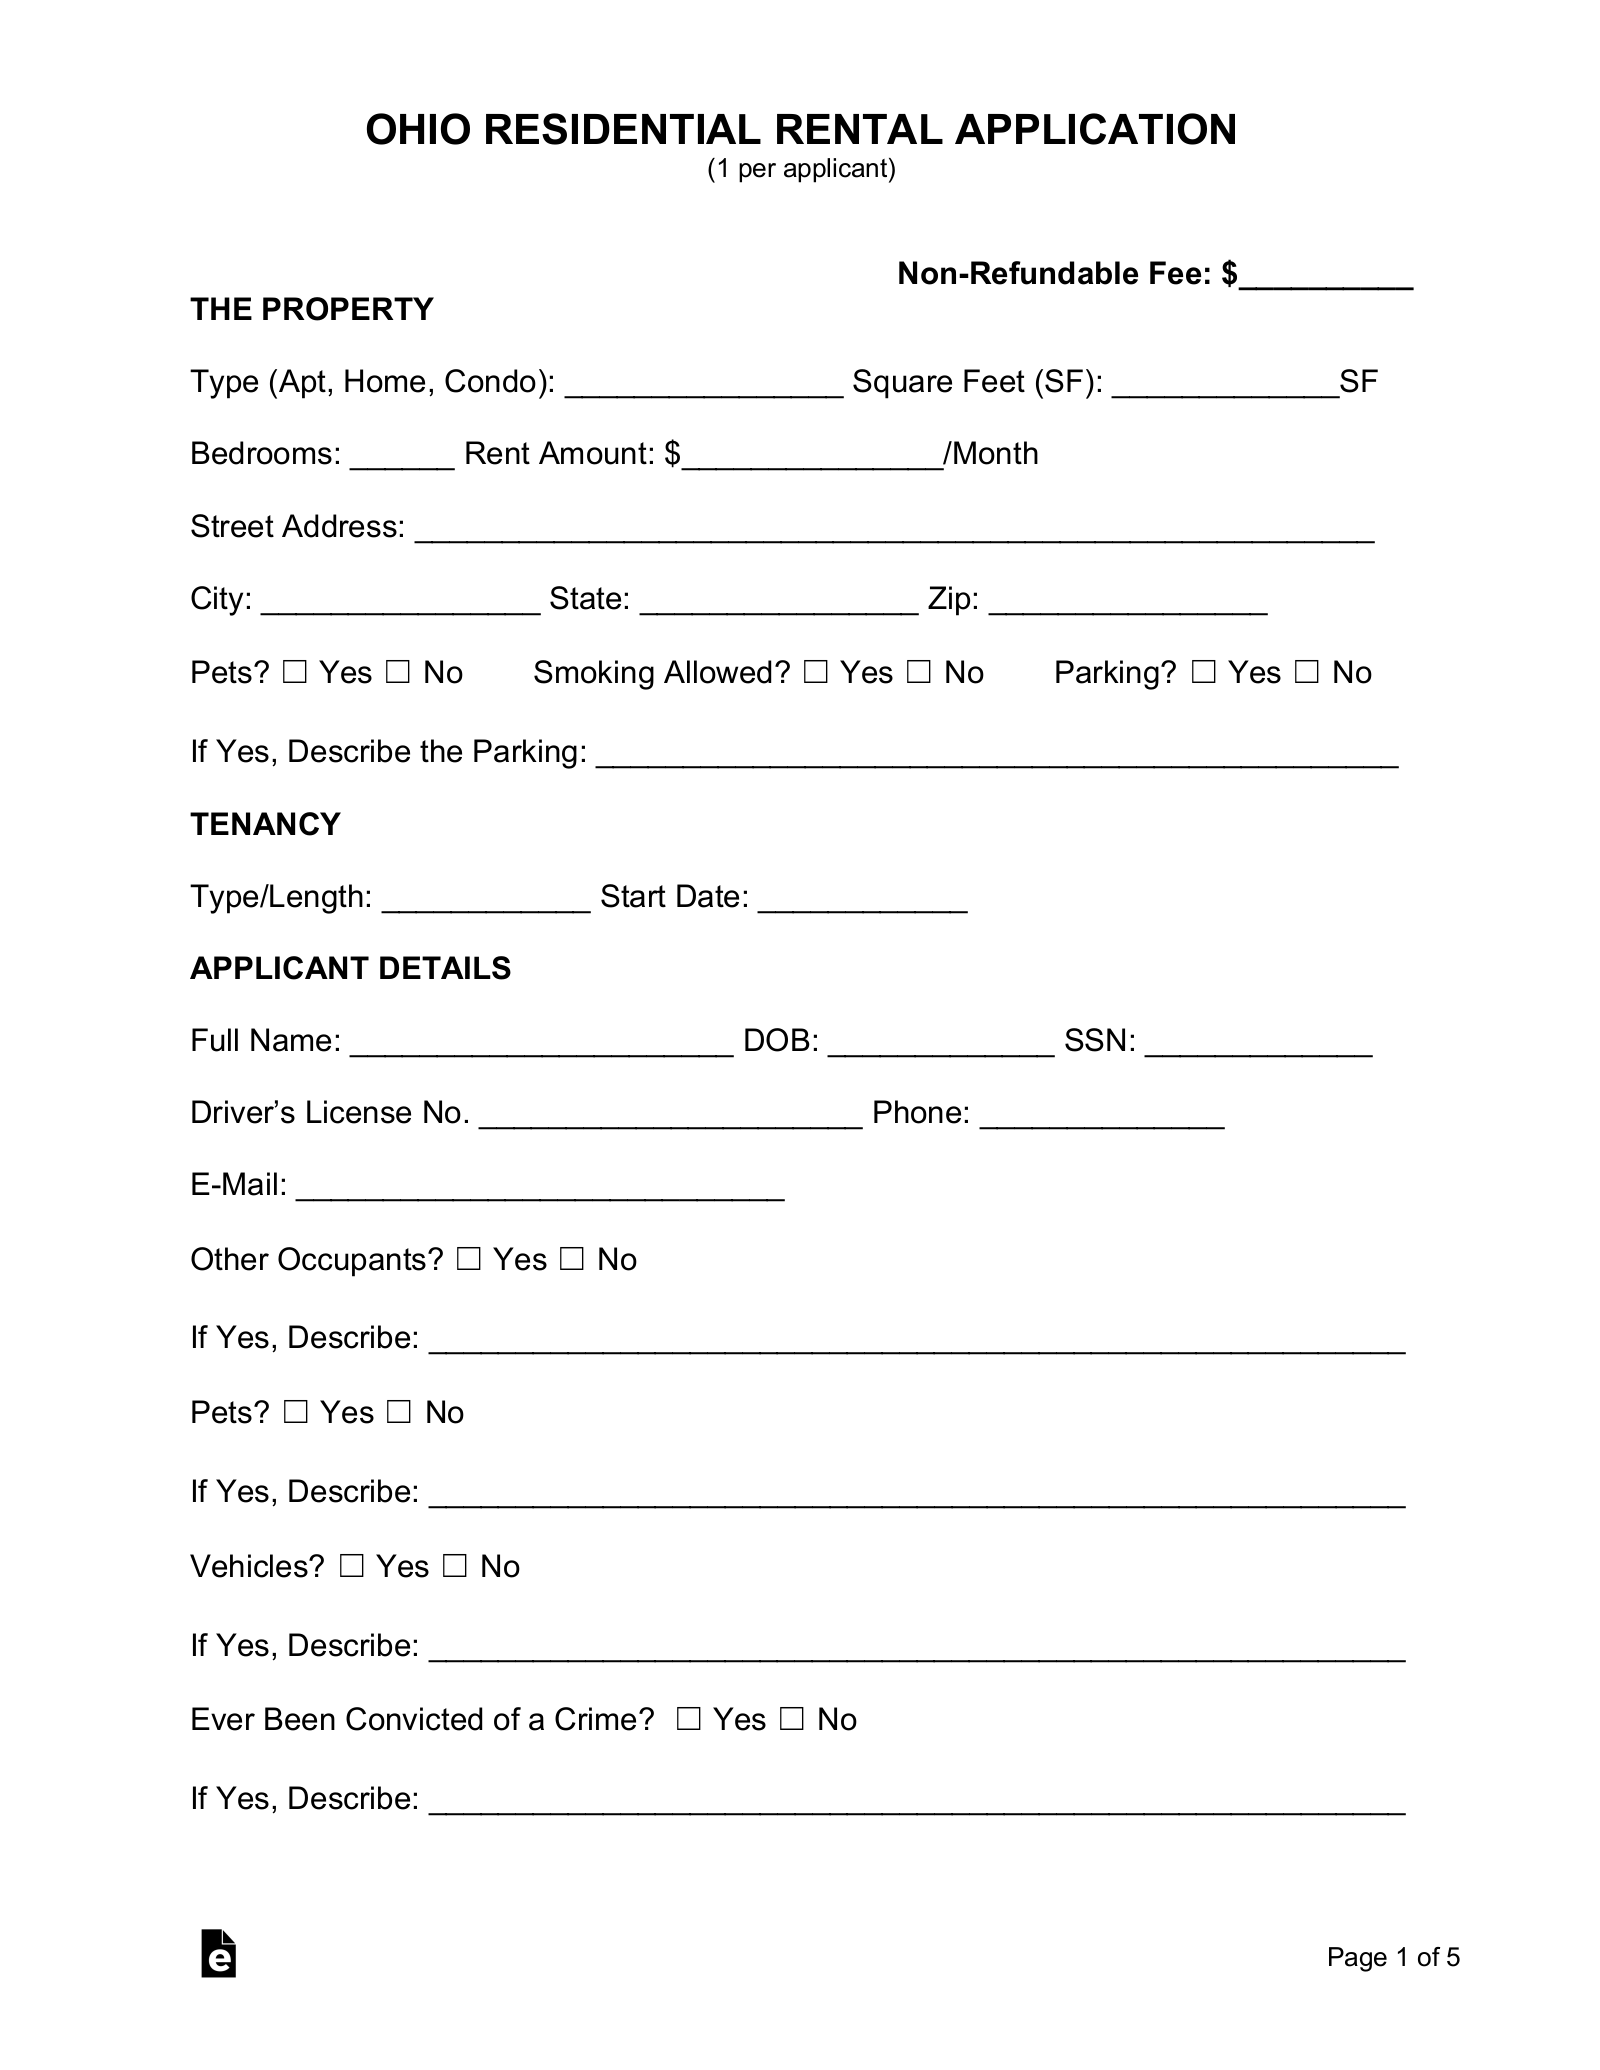 Ohio Rental Application Form